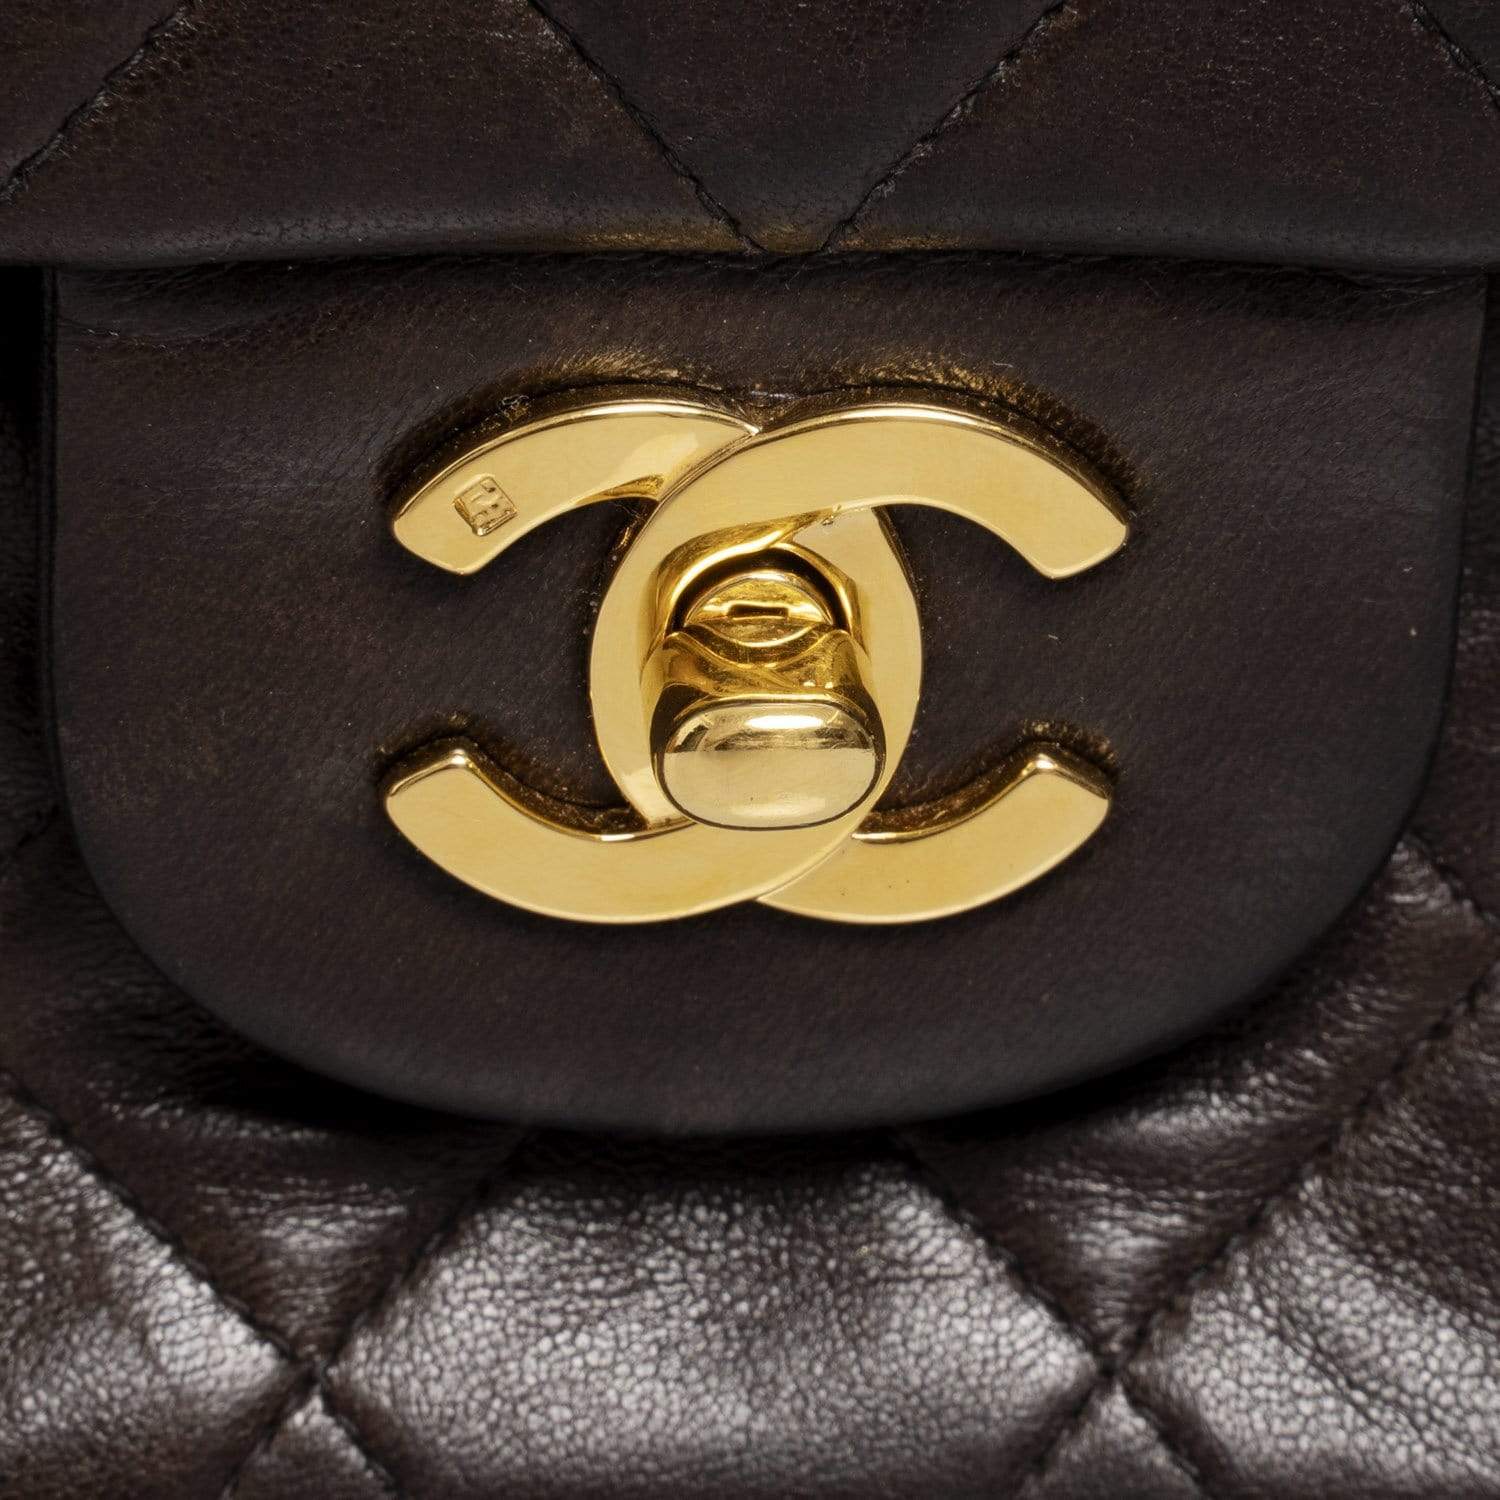 Chanel Chanel Vintage 10" Medium Dark Brown Classic Flap Bag - AWL1655